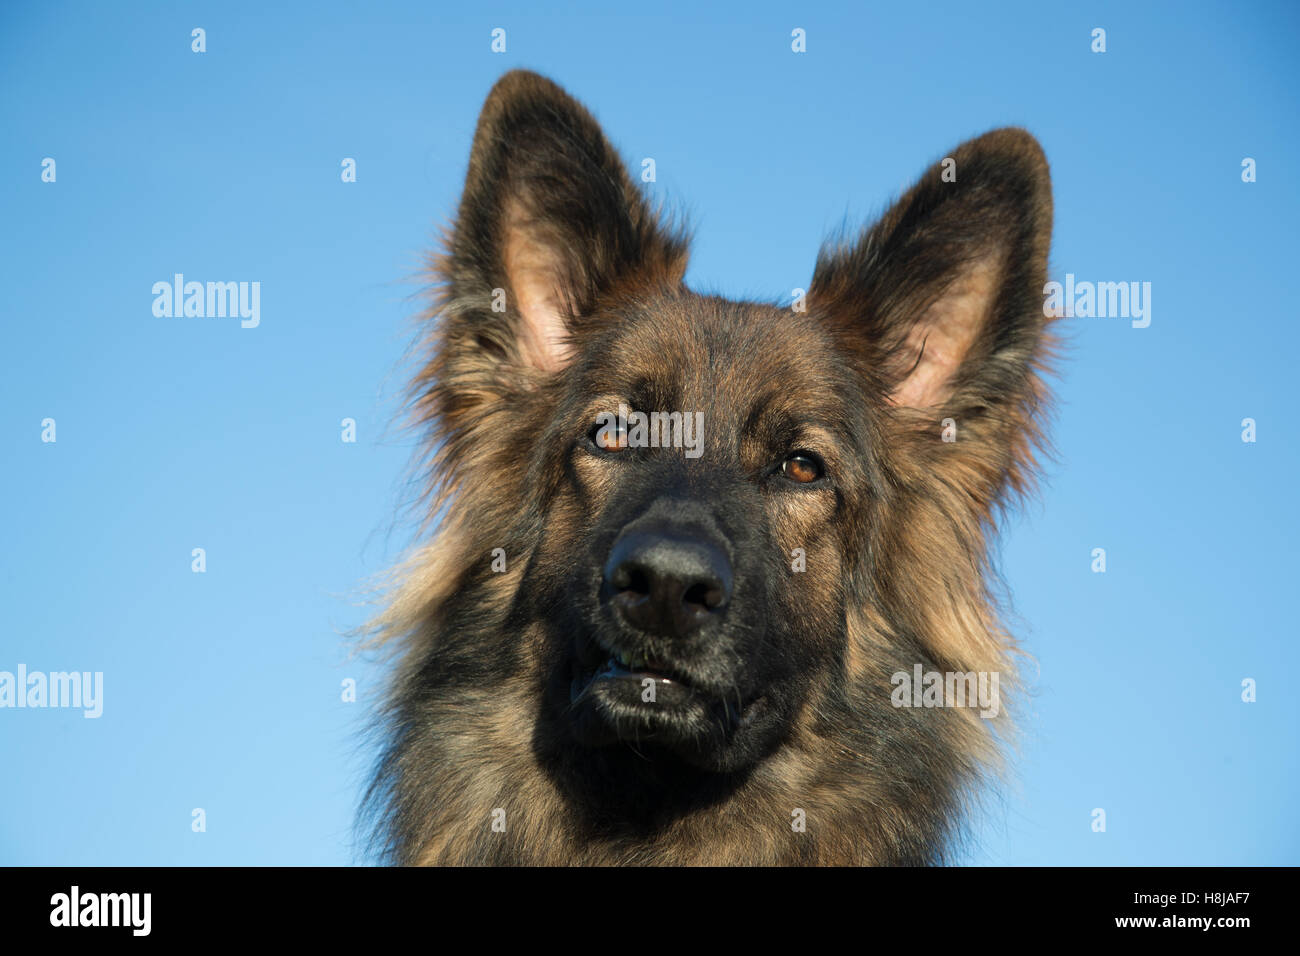 Alsatian dog head against a blue sky, he has long hair and a beautiful face. Stock Photo